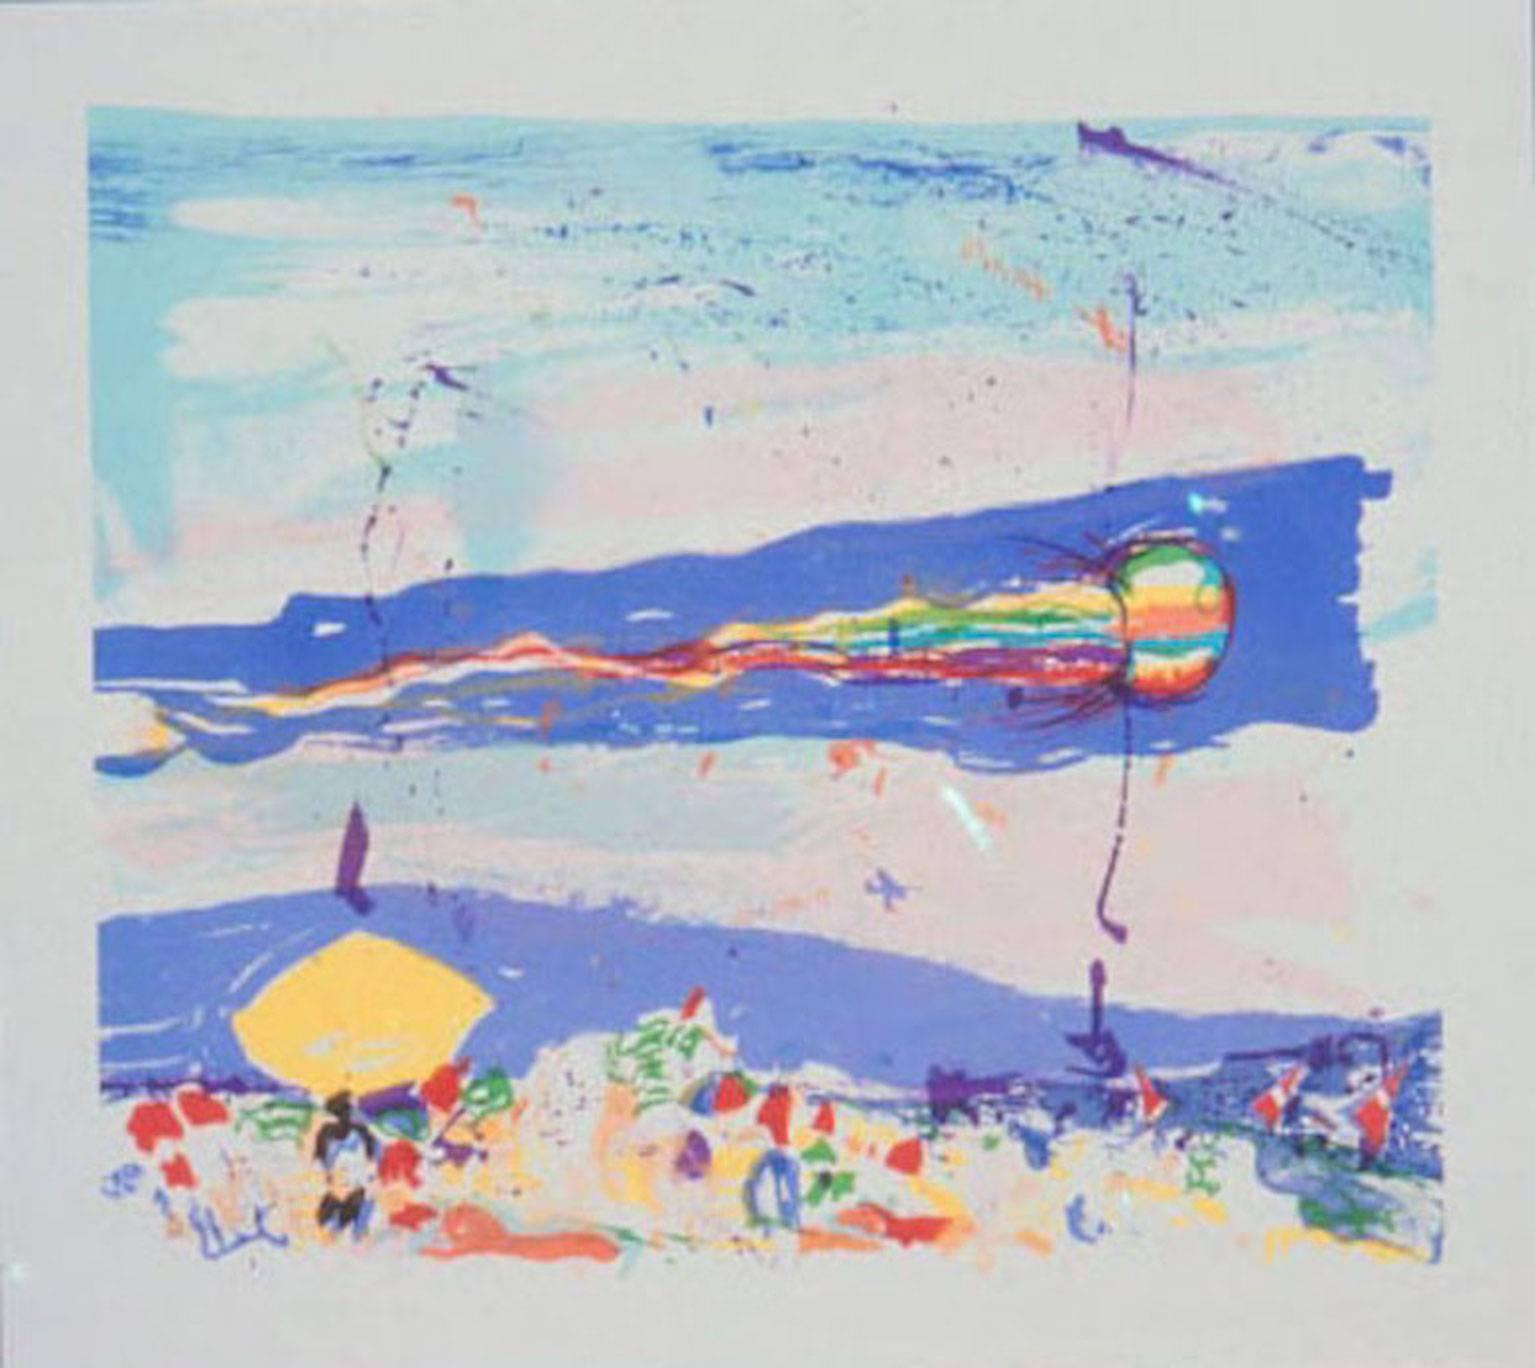 Kite on Gibson Beach (Pologne)     Impression de paysages abstraits contemporains - Print de Malcolm Morley